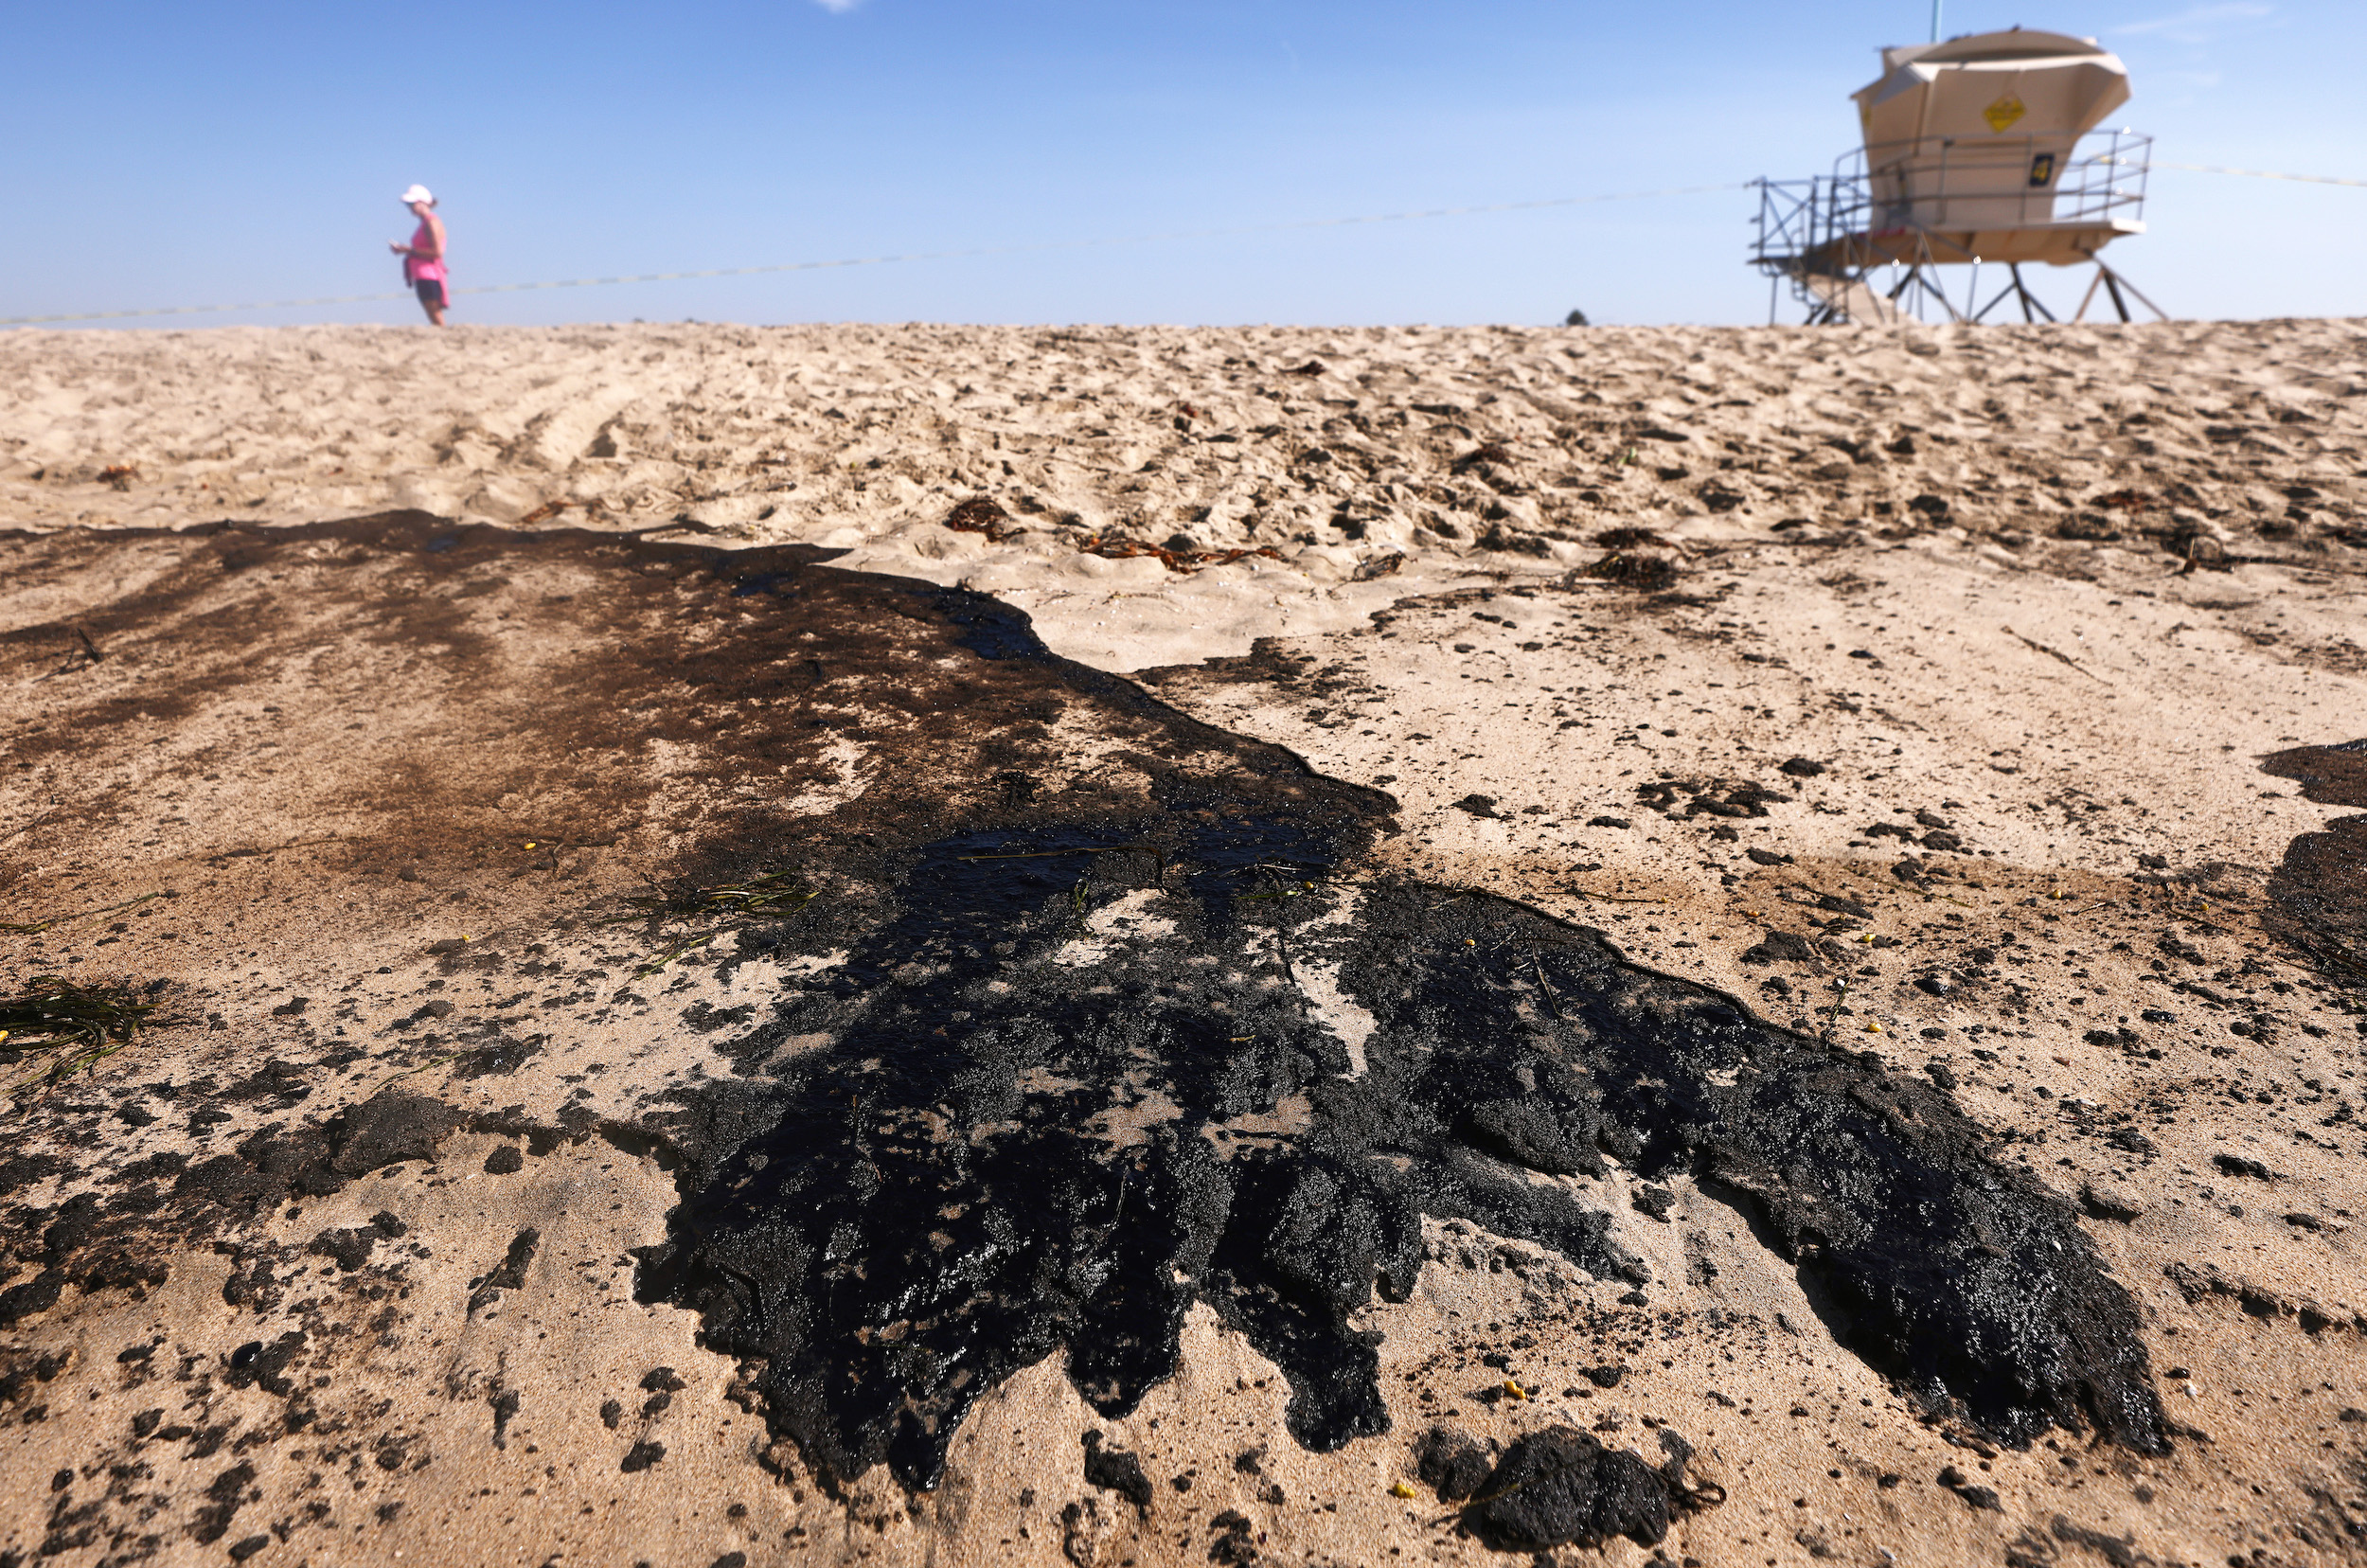 Major Oil Spill Fouls Southern California Beaches